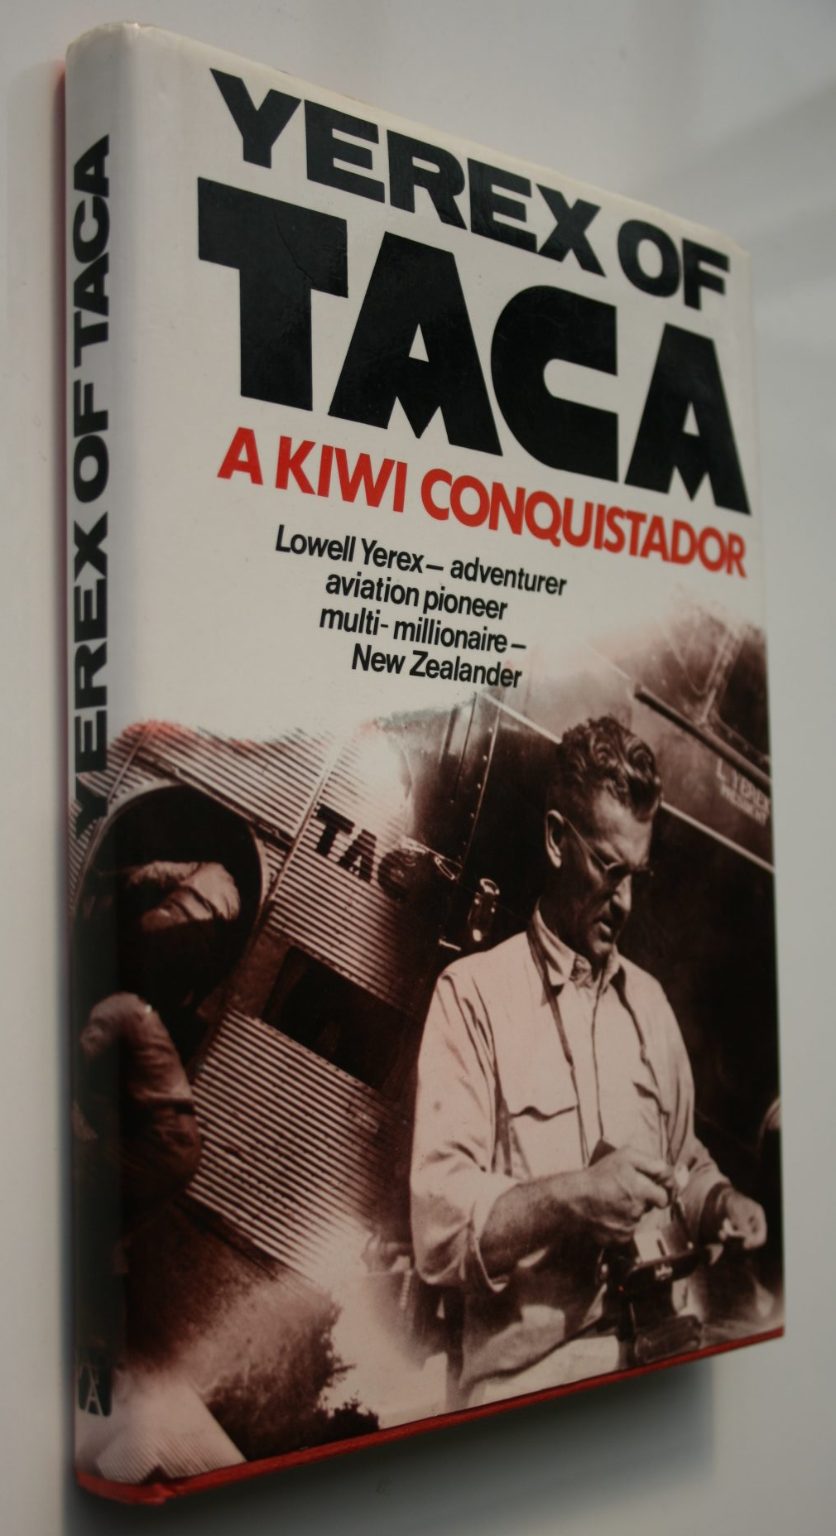 Yerex of TACA. A Kiwi Conquistador by David Yerex. 1985, first edition. VERY SCARCE IN HARDBACK.